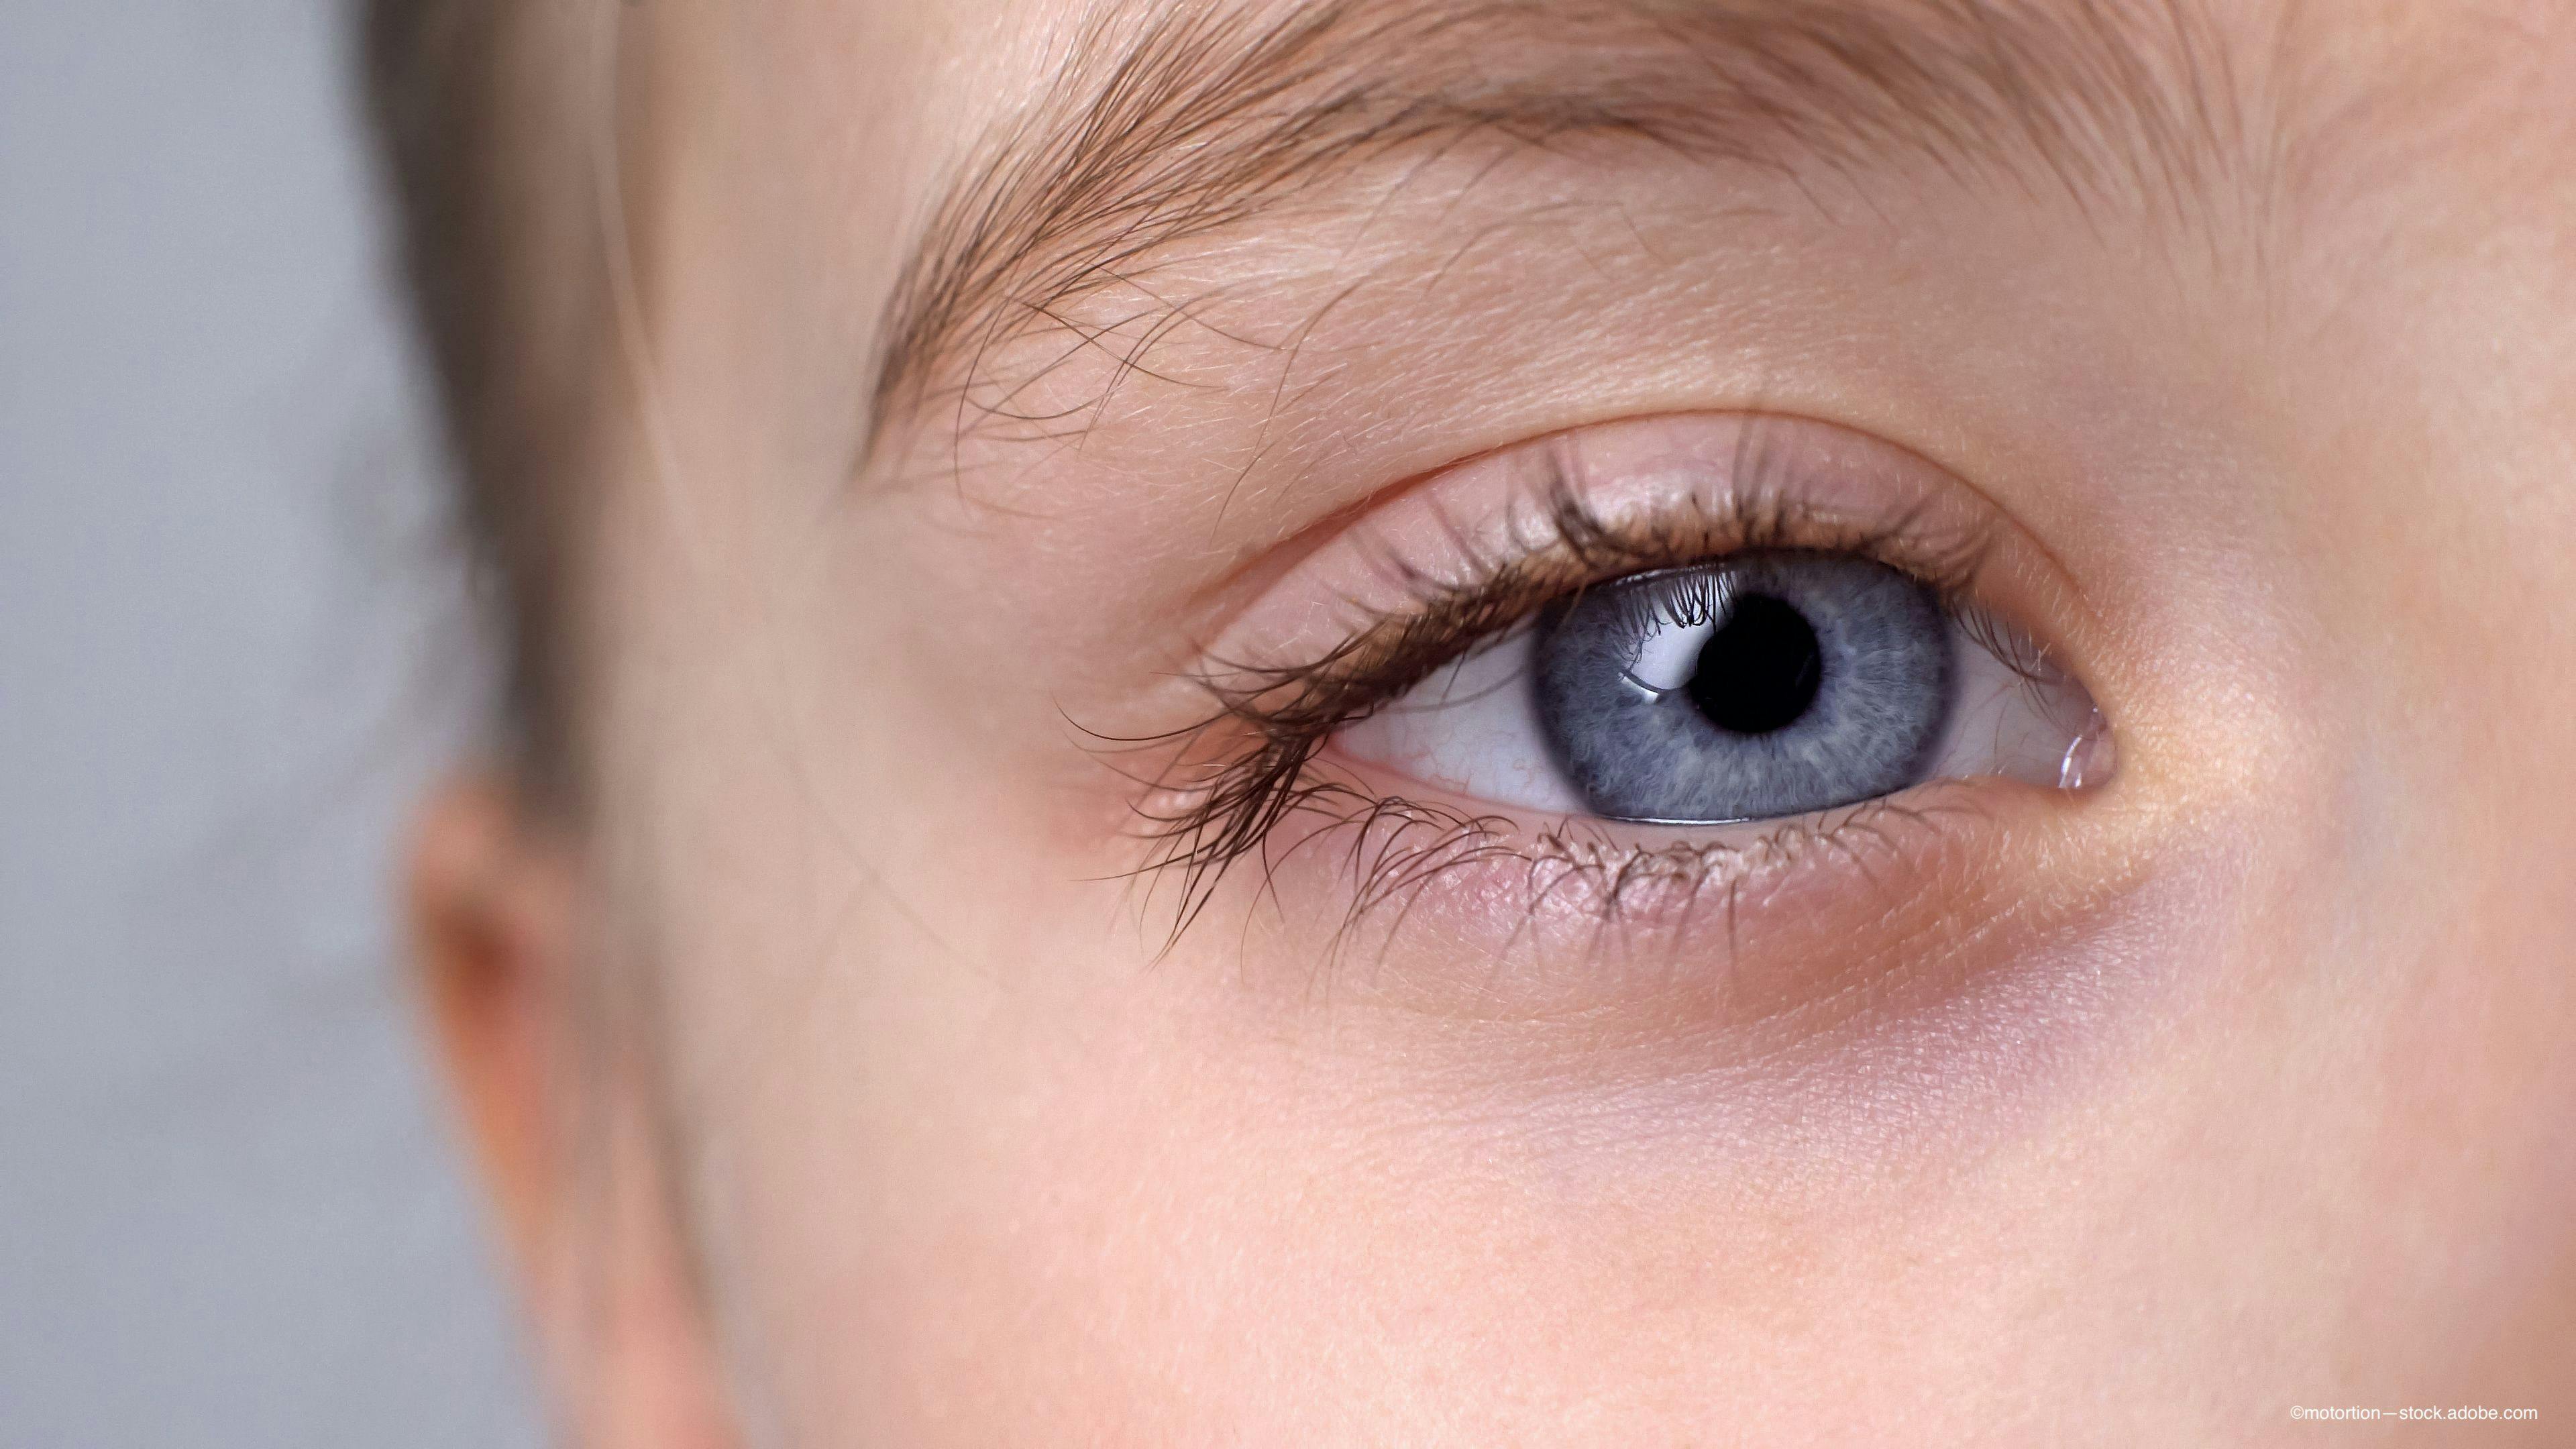 Pediatric ophthalmologists target inherited retinal diseases